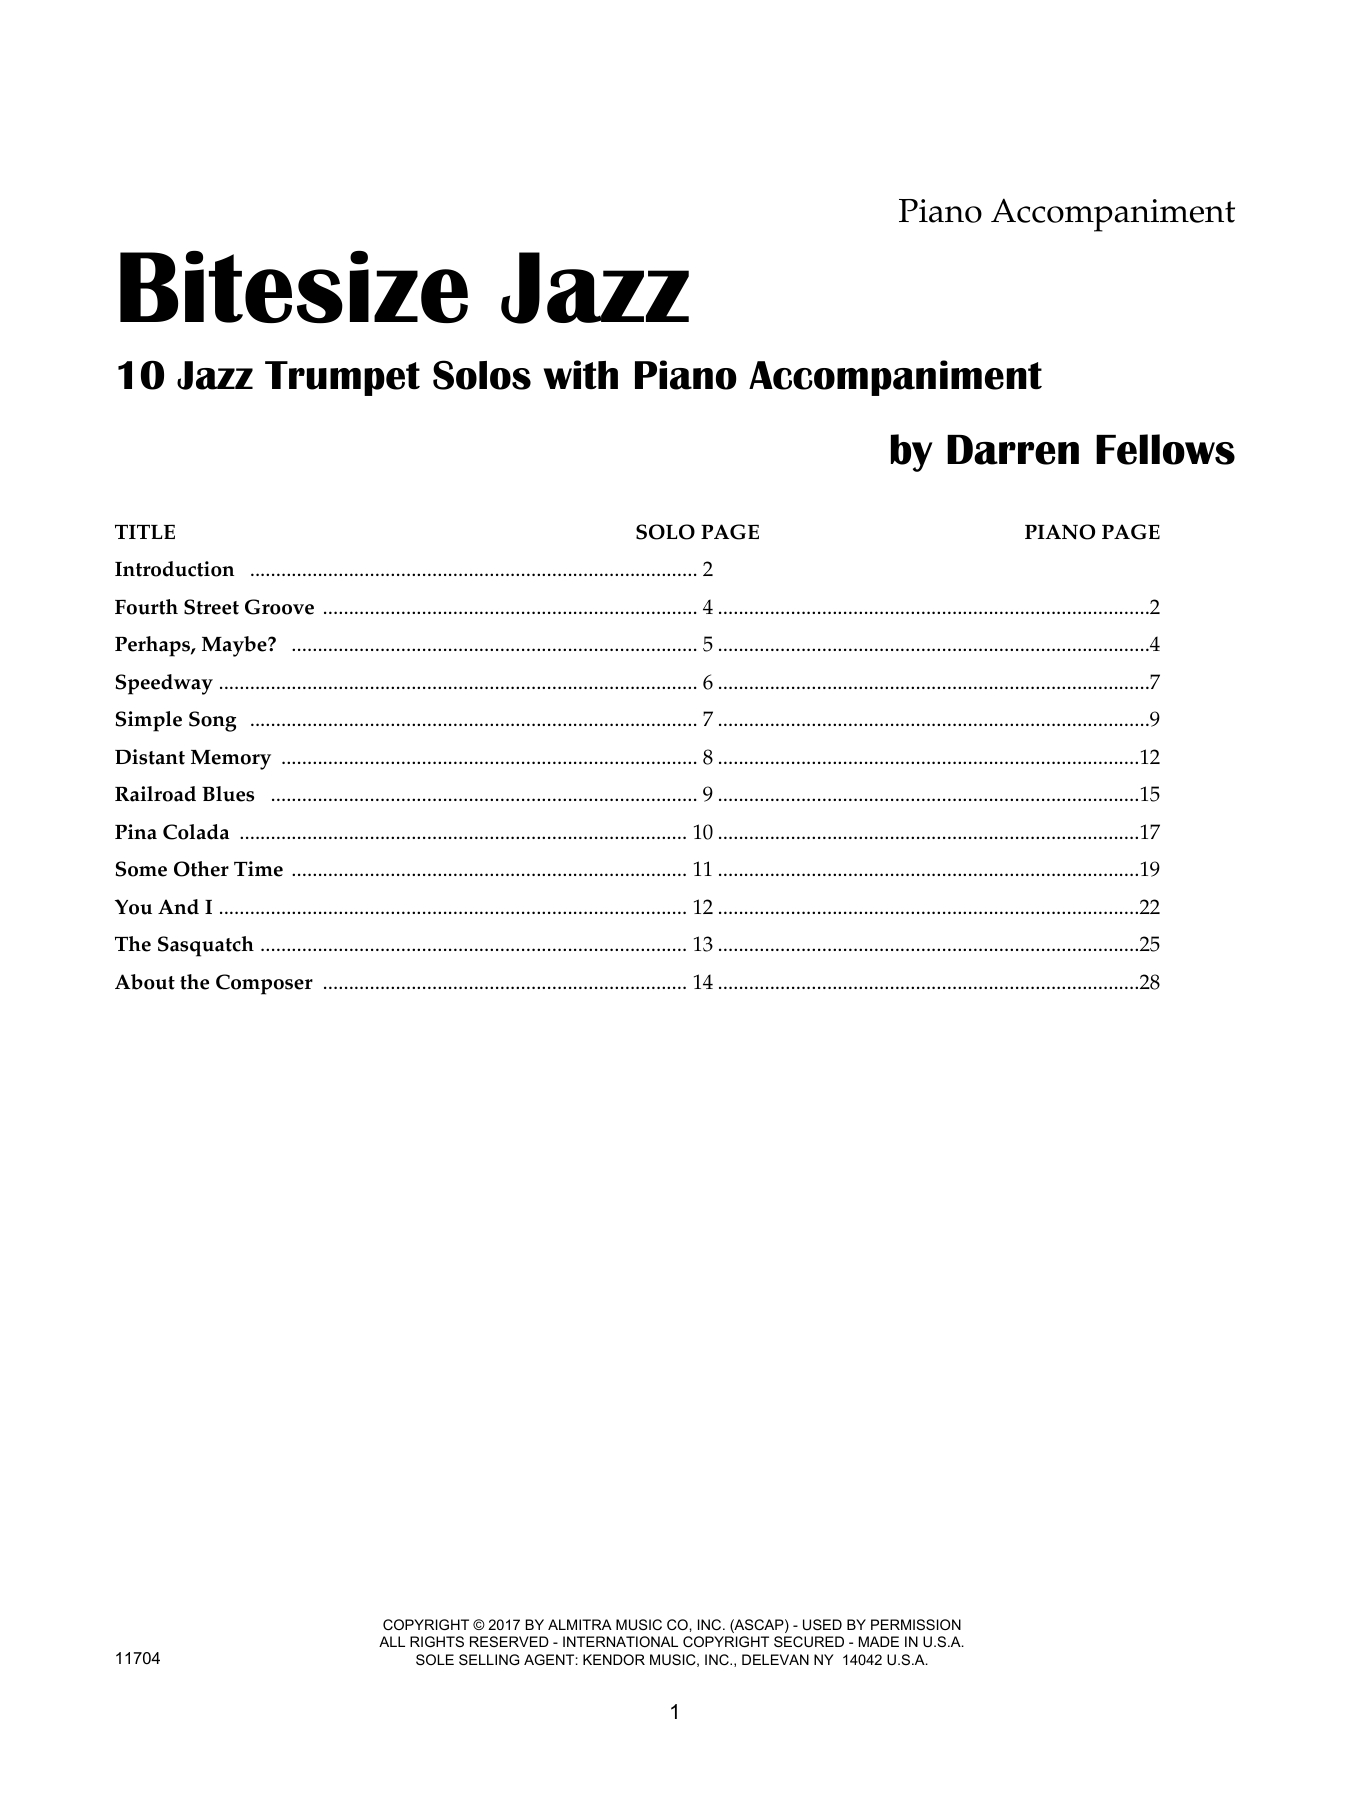 Download Darren Fellows Bitesize Jazz - Piano Accompaniment Sheet Music